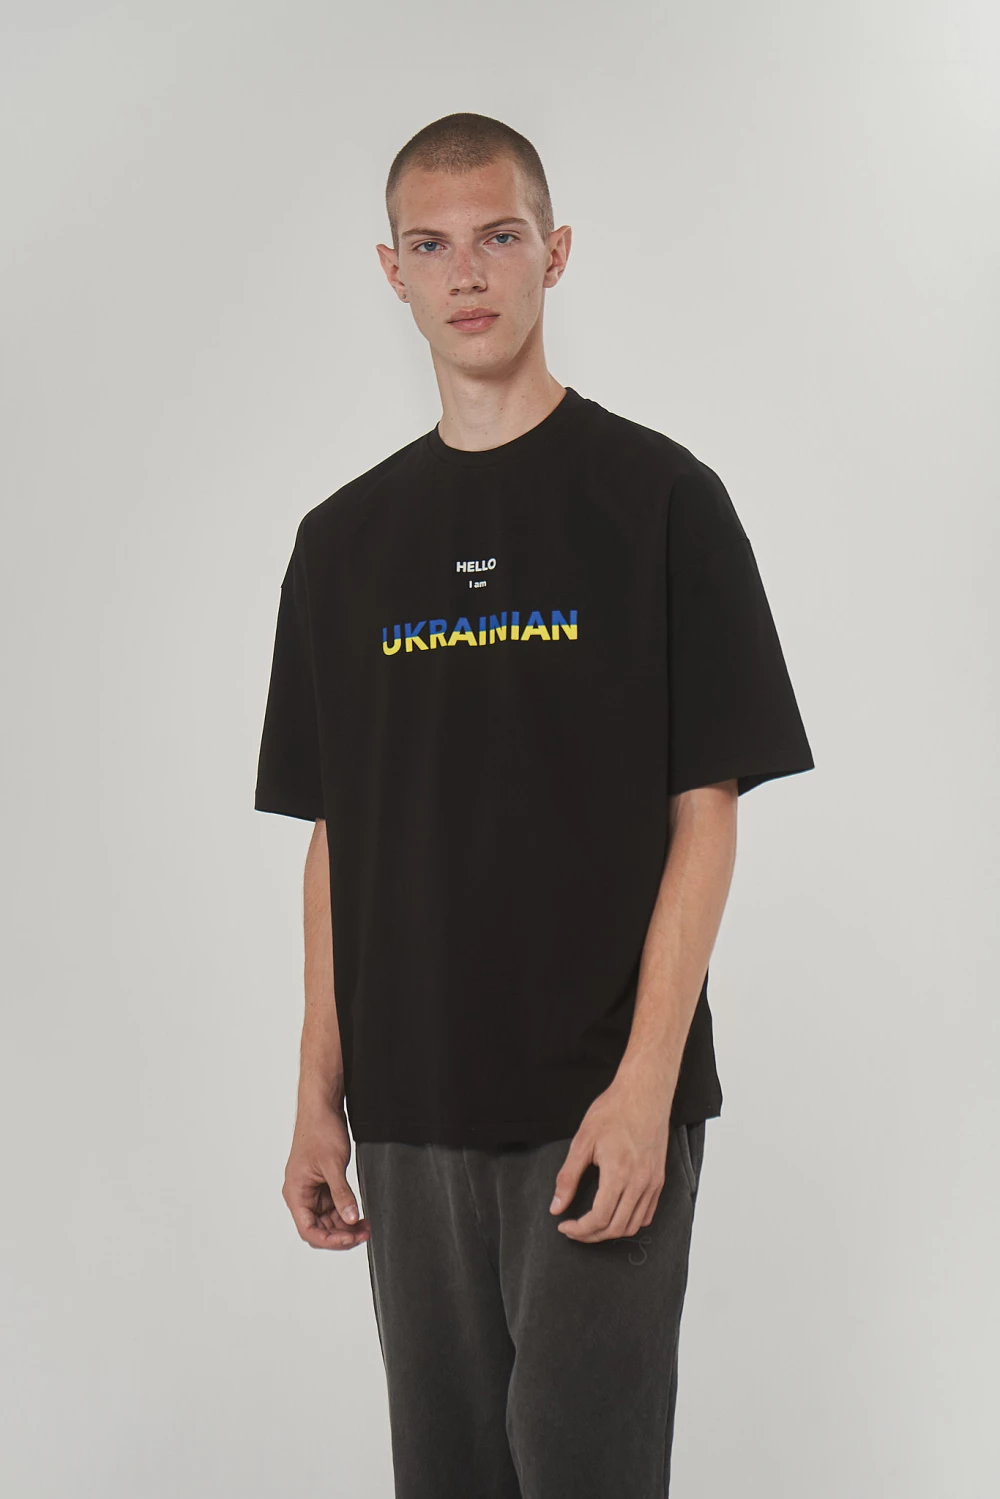 ukrainian t-shirt in black color